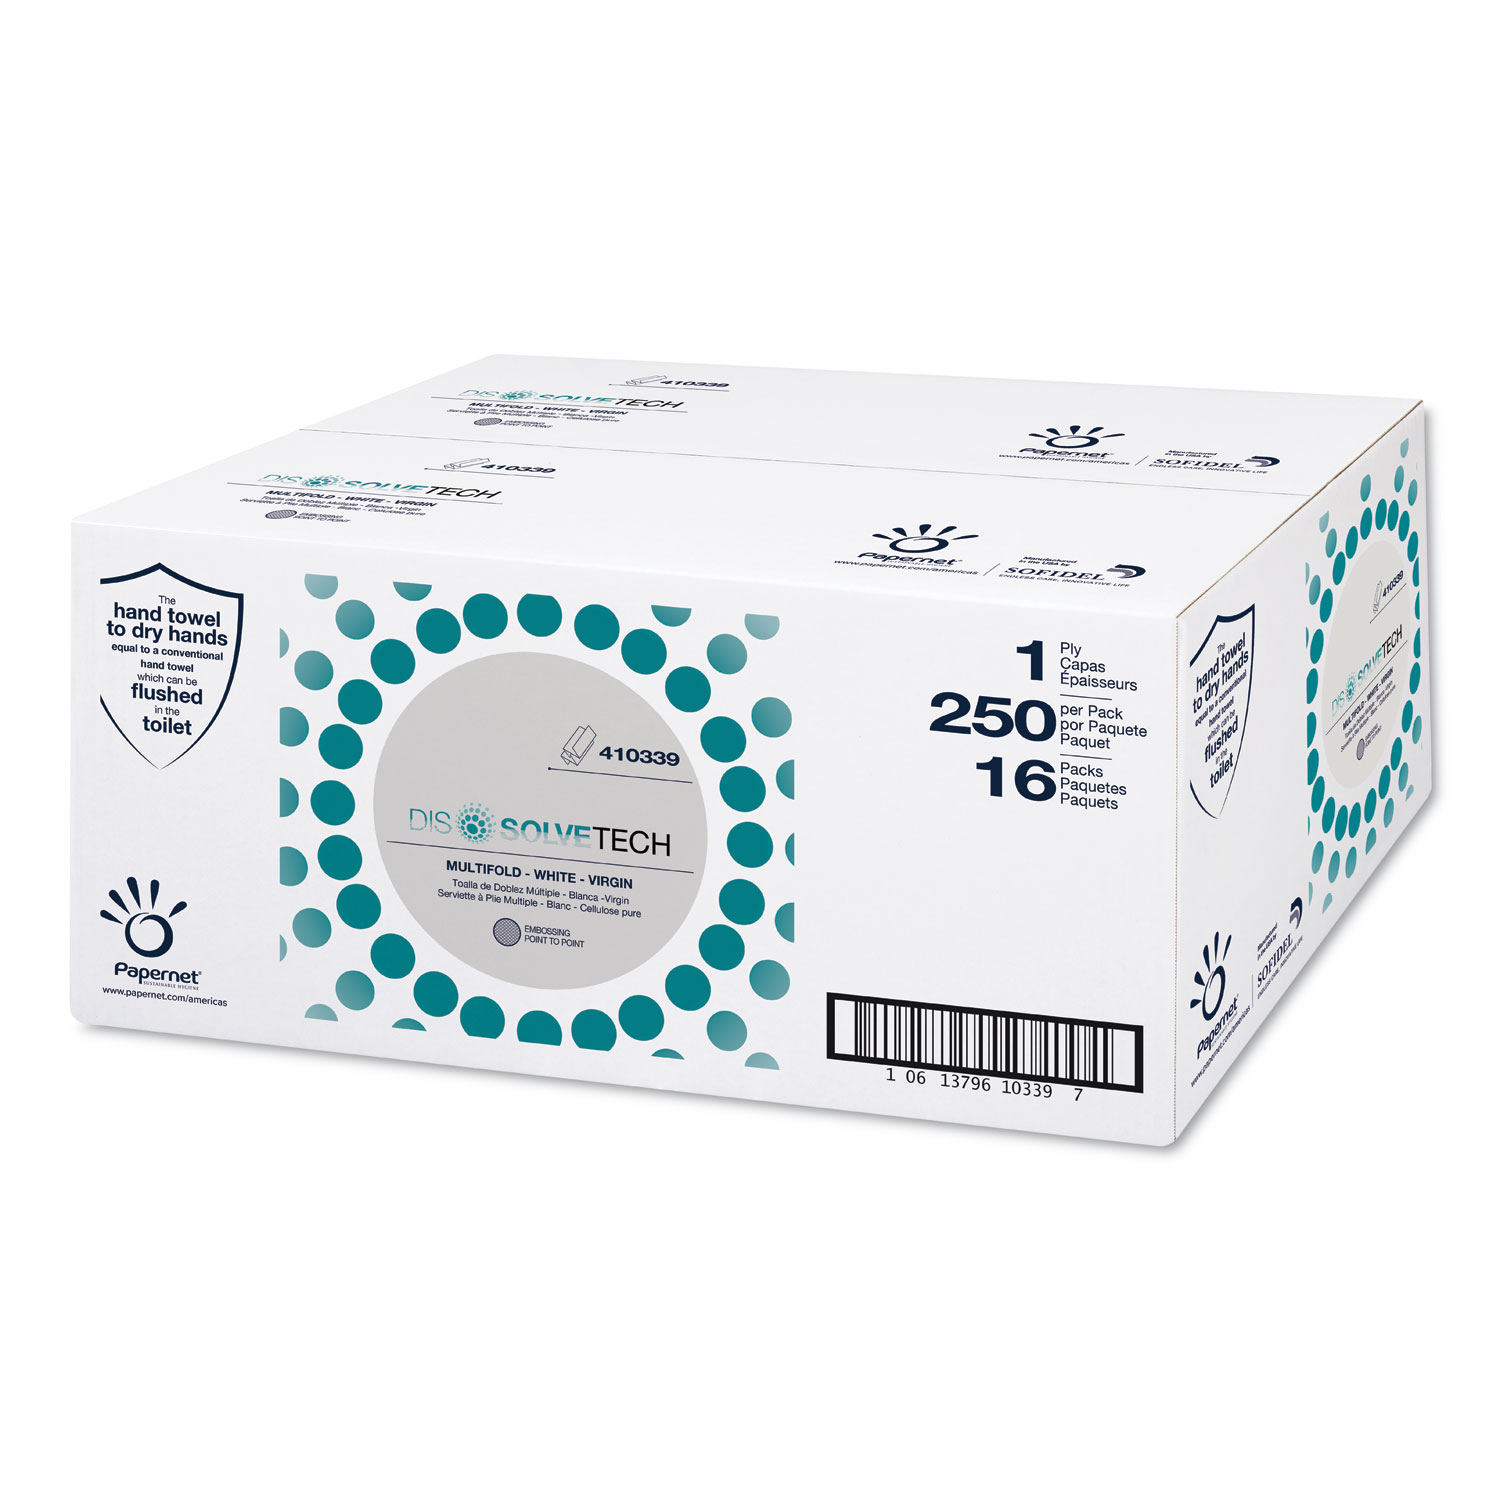  Papernet 410339 DissolveTech Paper Towel, Multifold, 9 1/2 x 9 1/4, White, 16 Packs/Carton (SOD410339) 